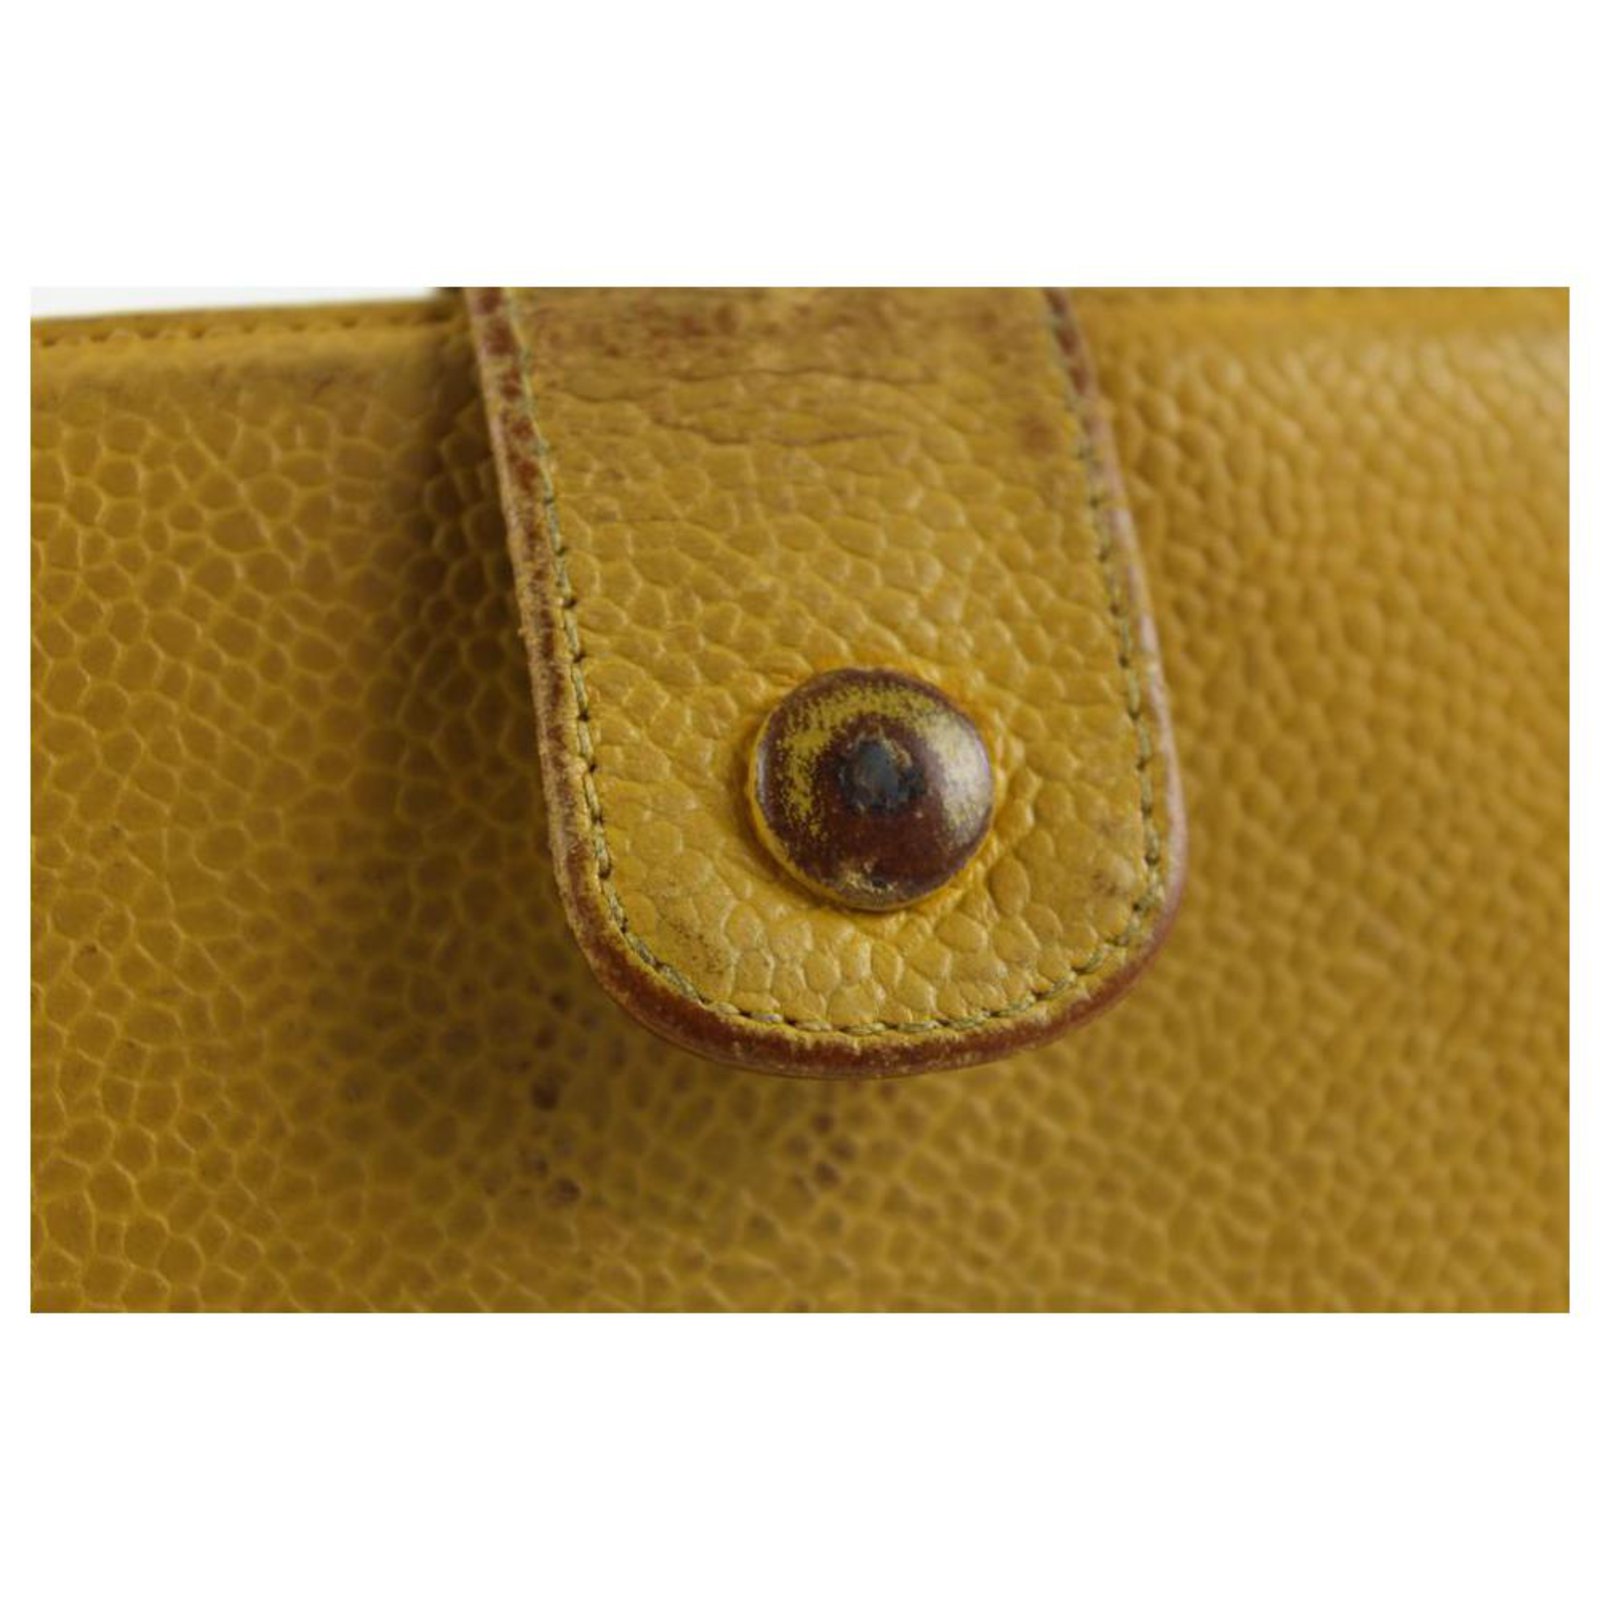 Chanel Mustard Yellow Caviar Leather CC Logo Flap Wallet 791ccs42